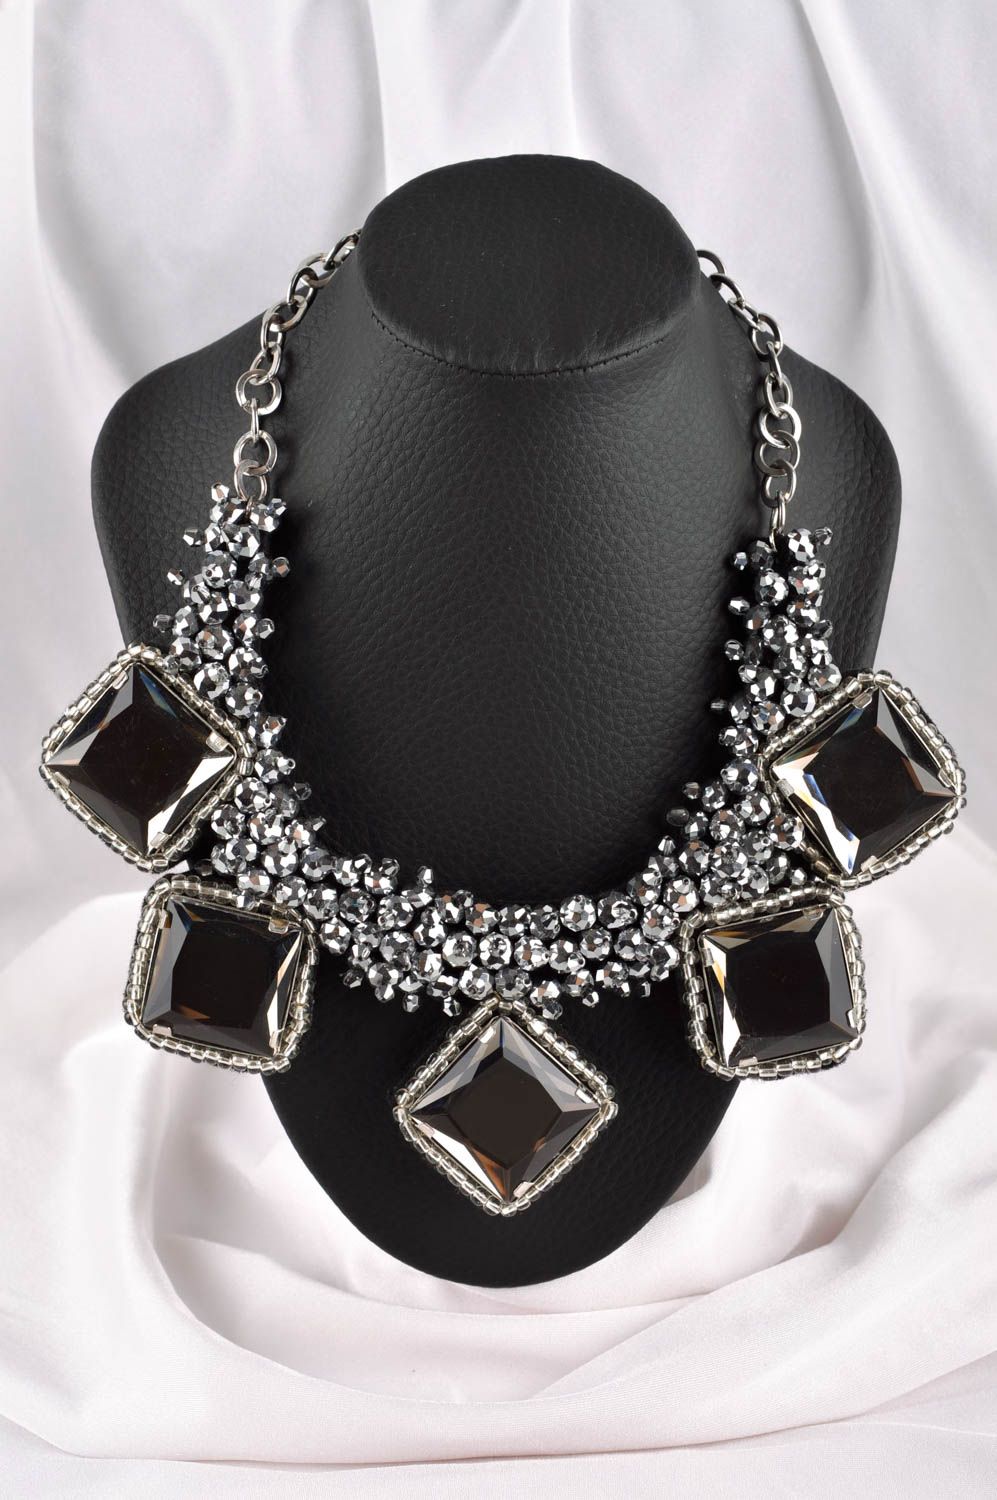 Collier strass cristaux Bijou fait main massif design original Cadeau femme photo 1